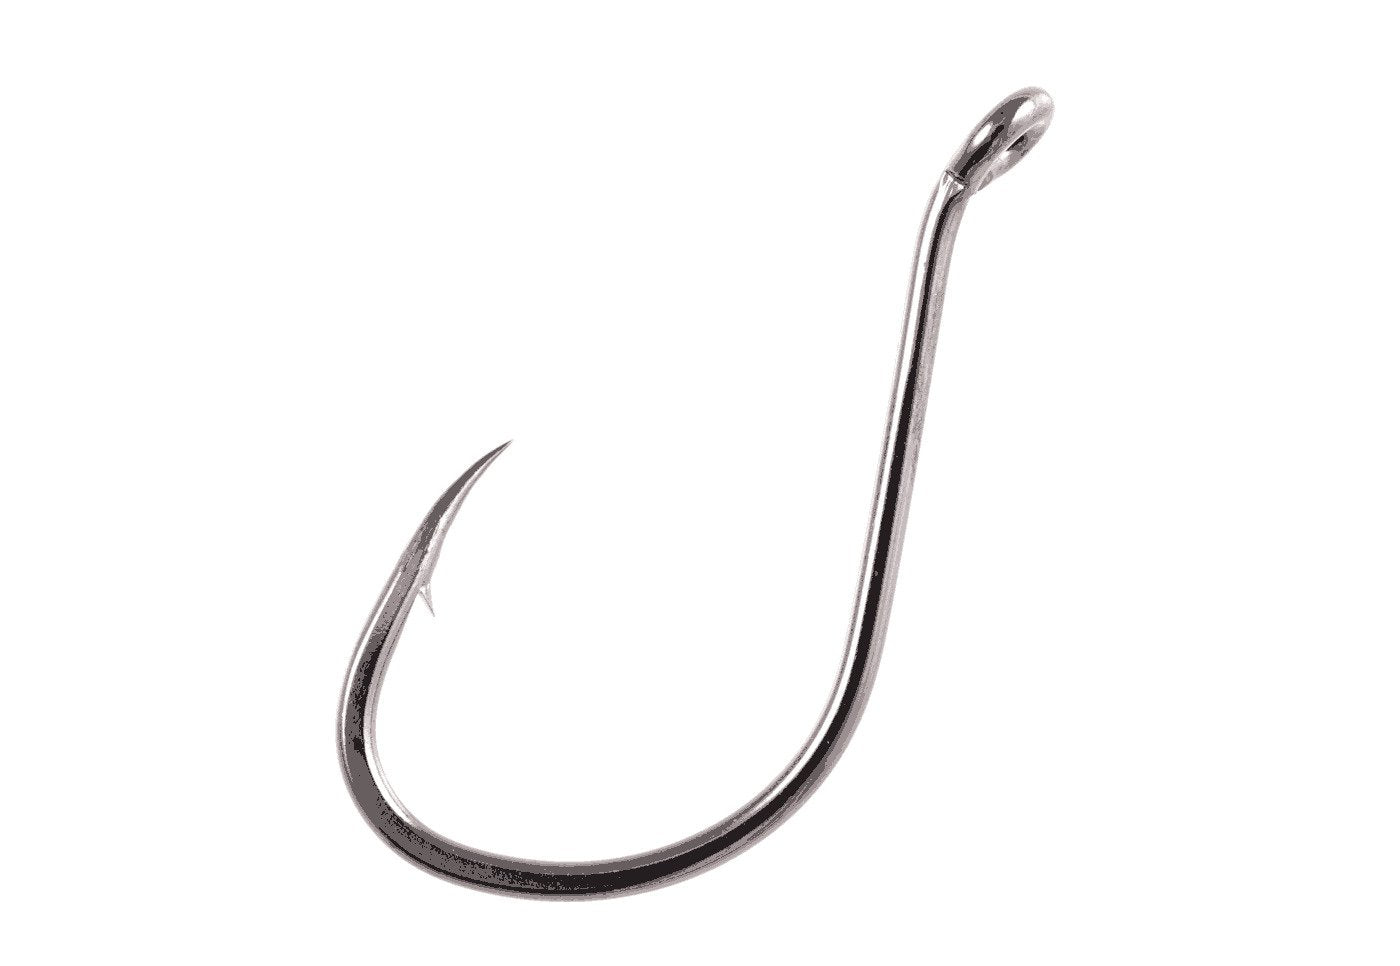 Buy NANAOUS Fishing Hook Quick Removal Device, 5 Pcs Fishing Hook